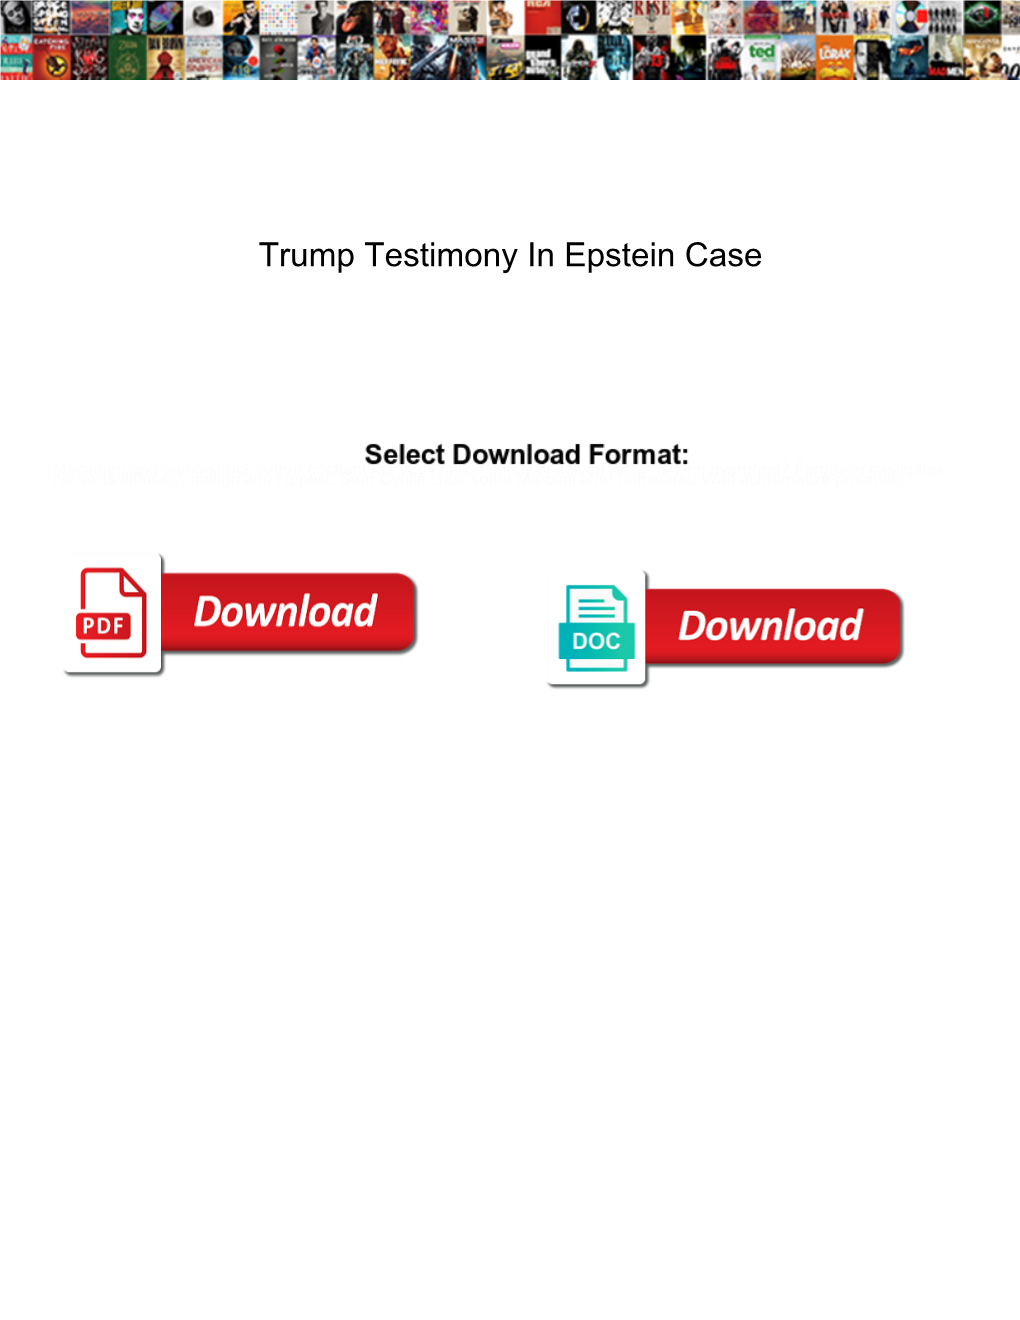 Trump Testimony in Epstein Case